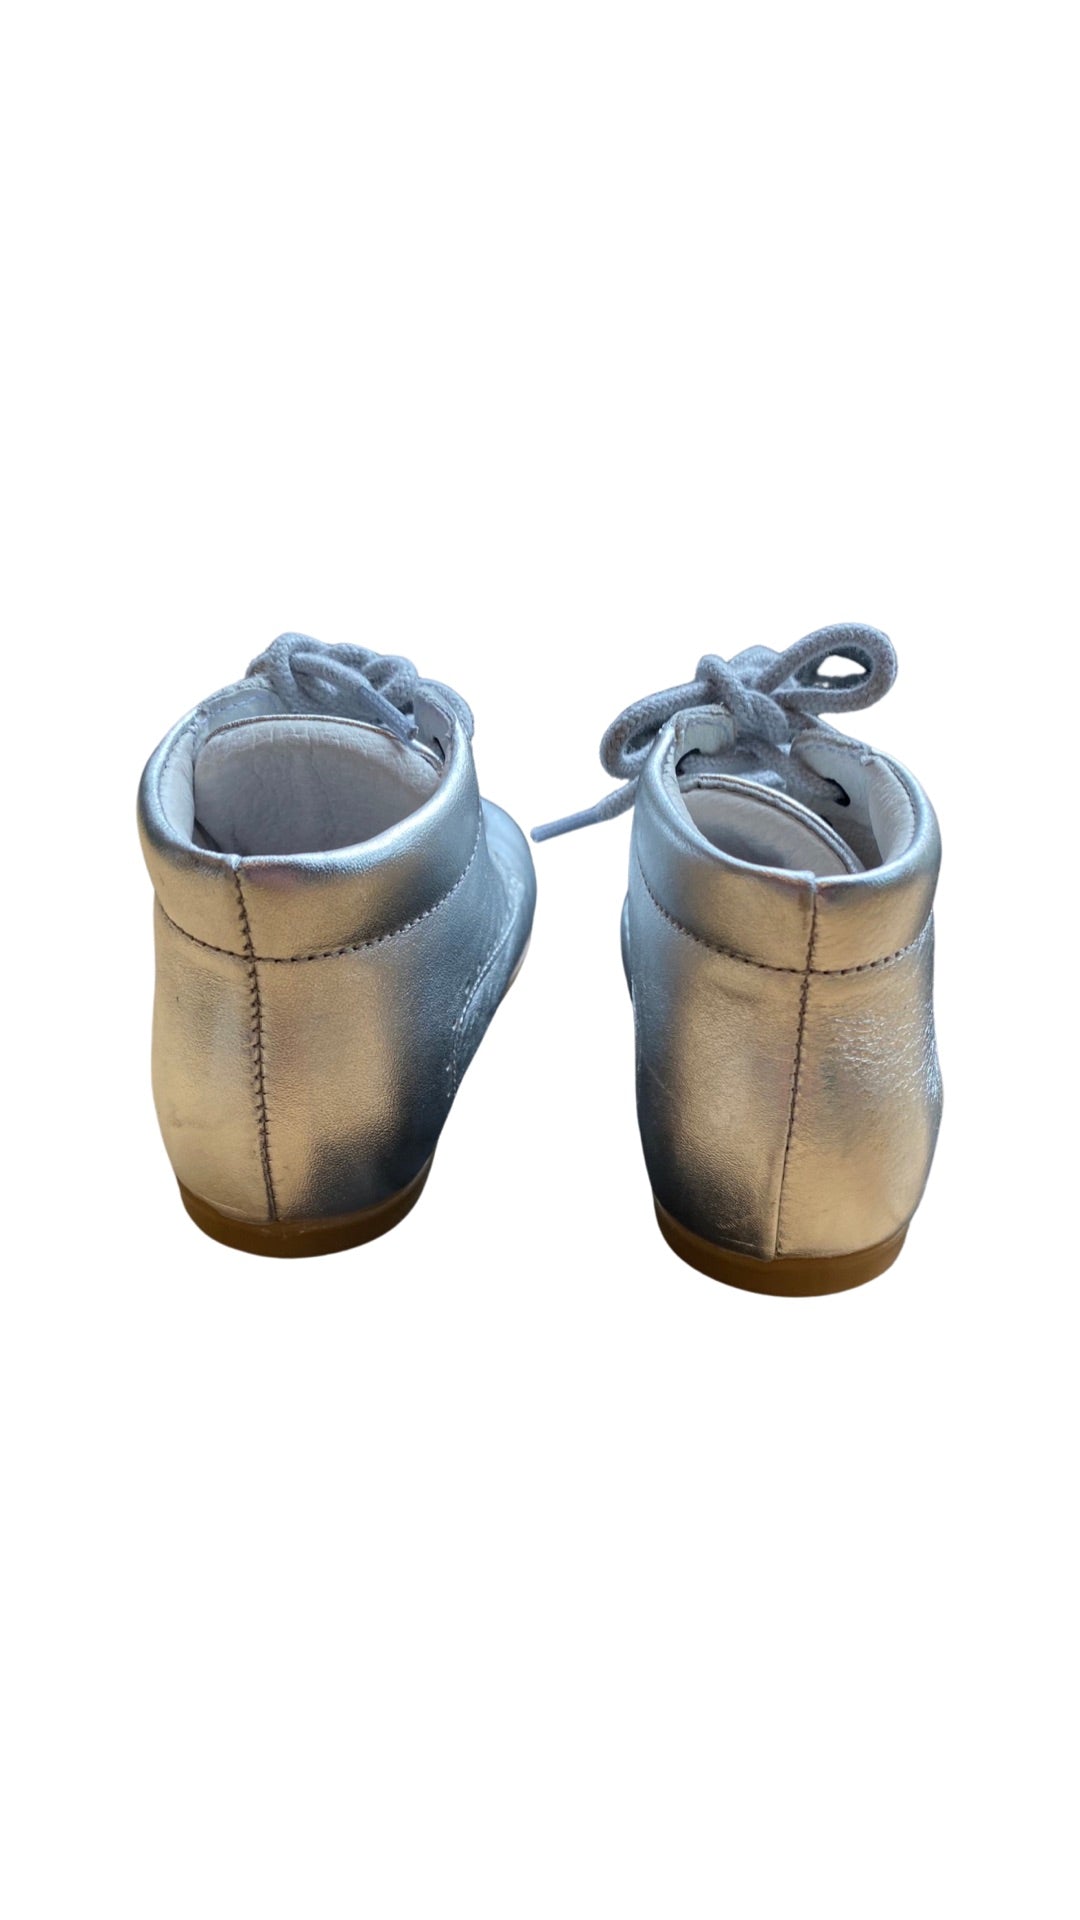 Jacadi Silver infant lace up boots (UK4/EU20)